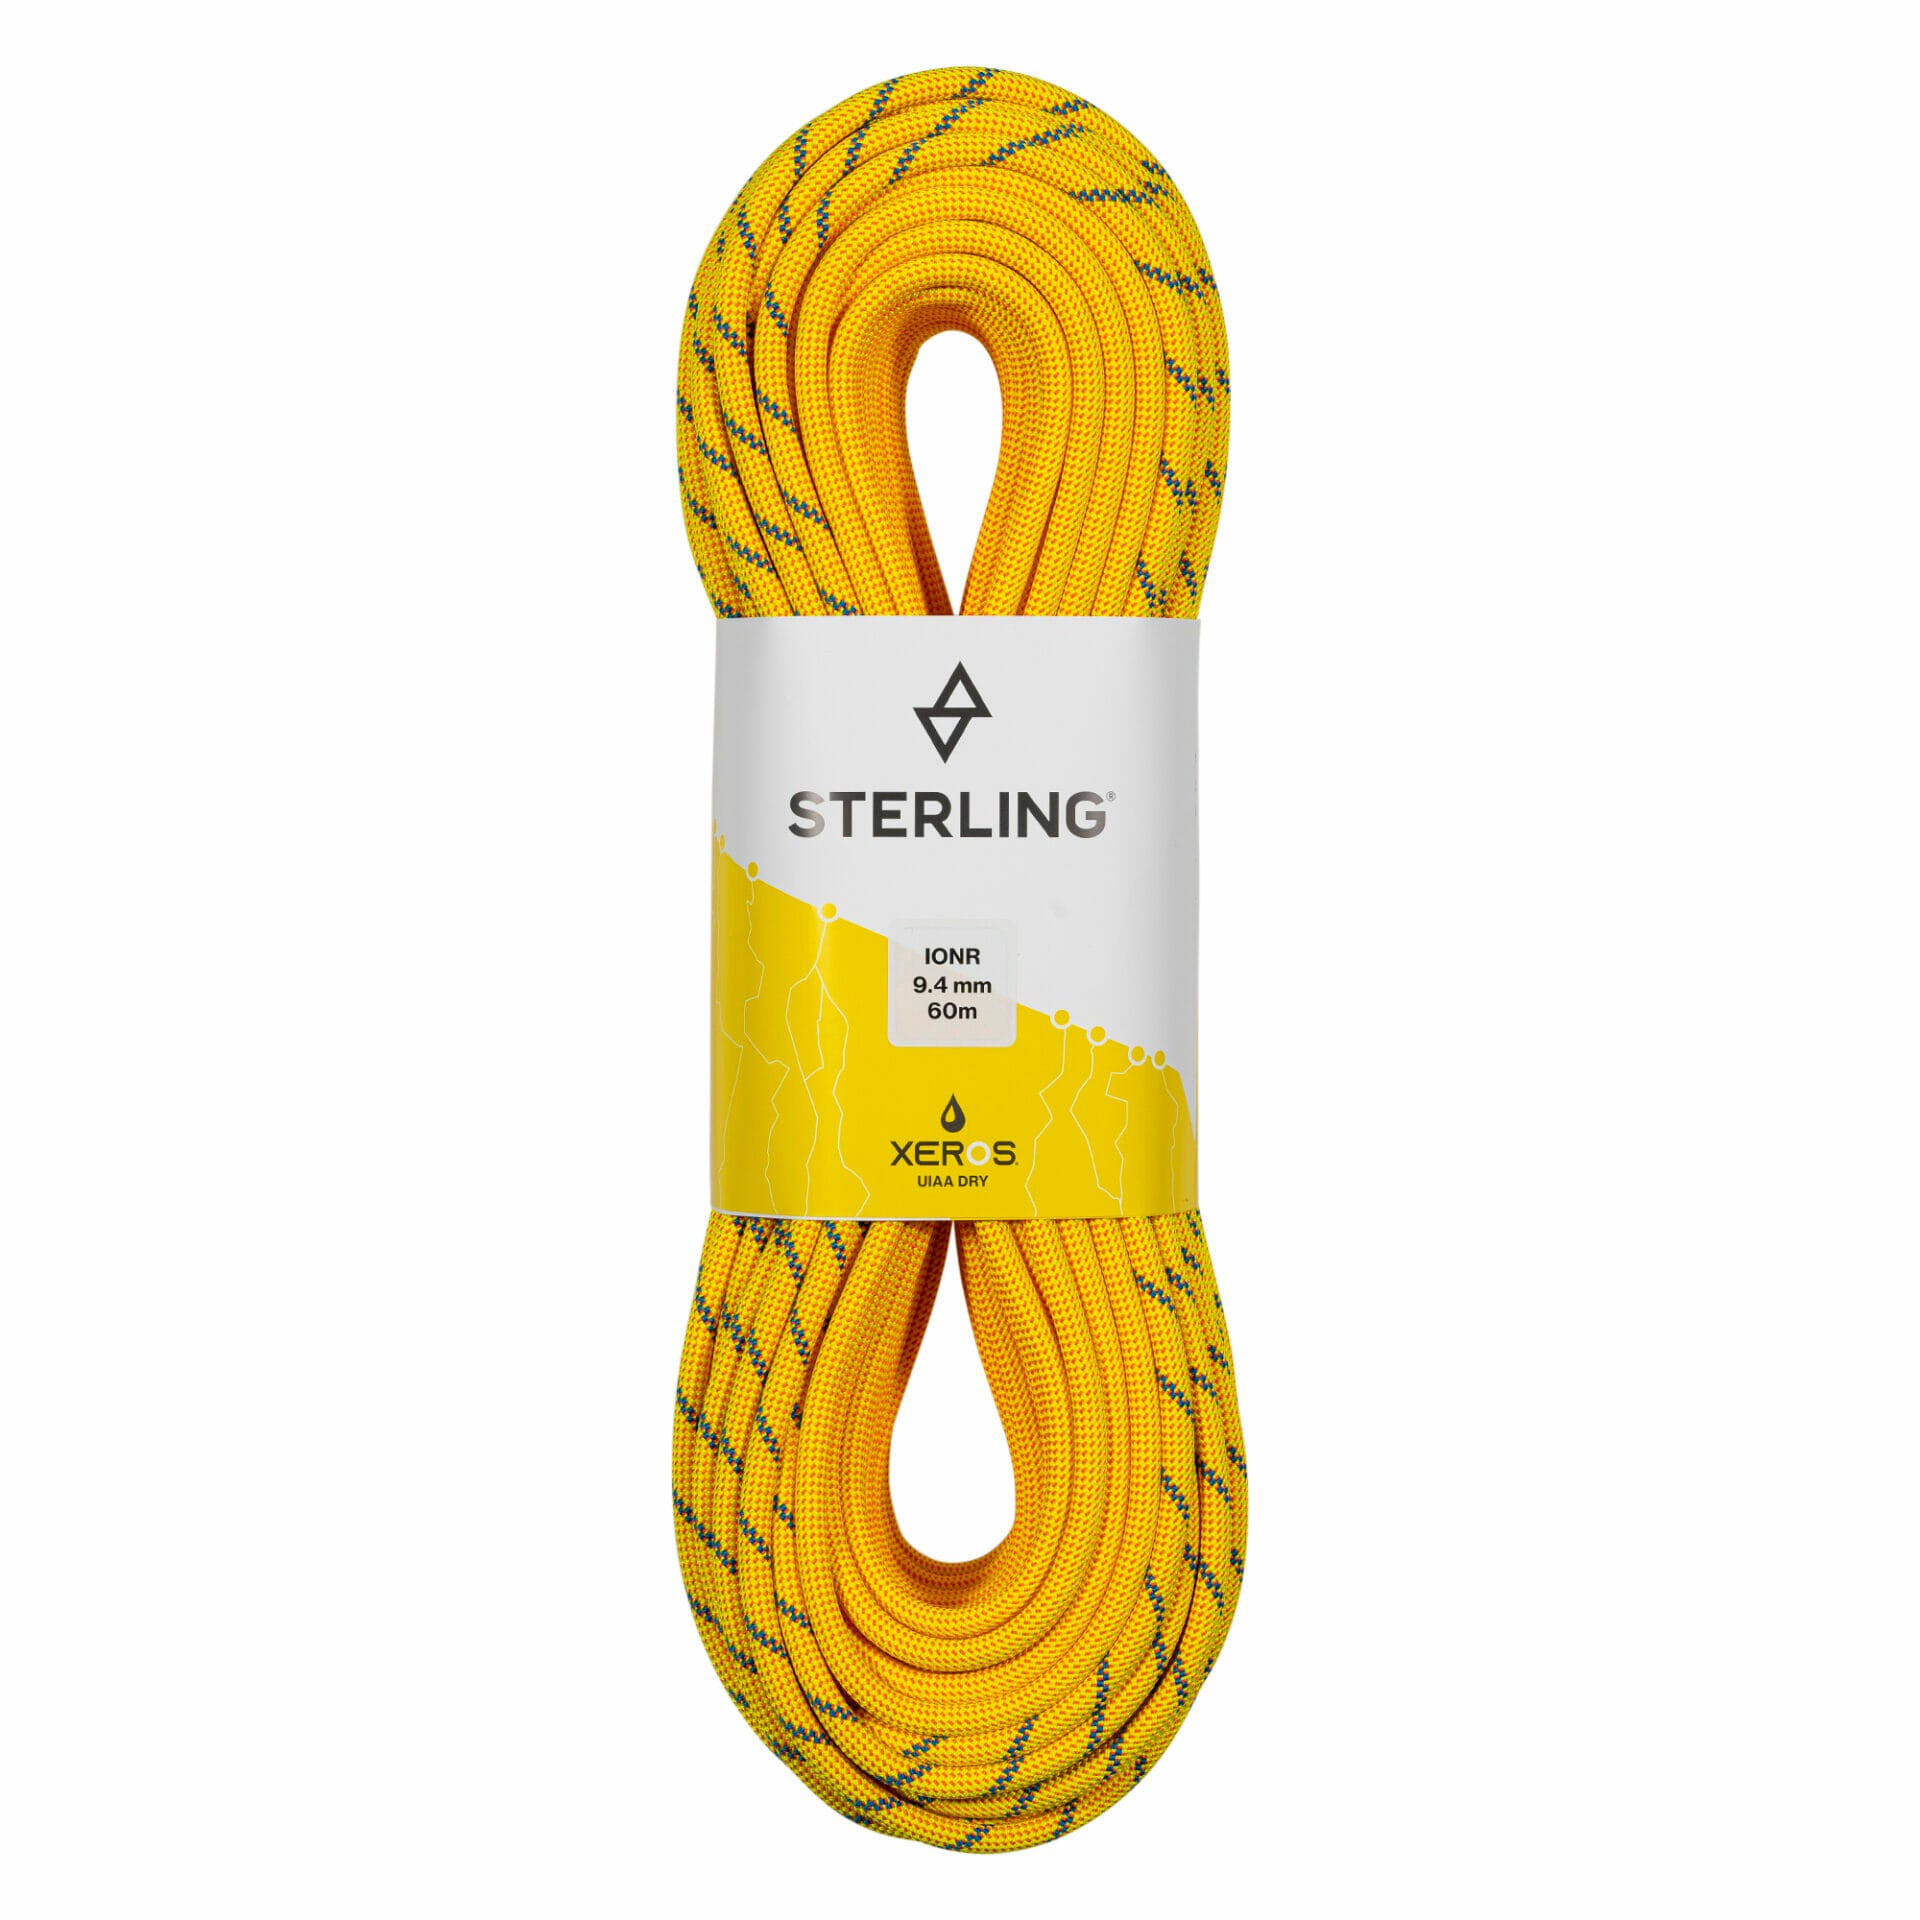 IonR 9.4 BiColor XEROS UIAA Dry Rope